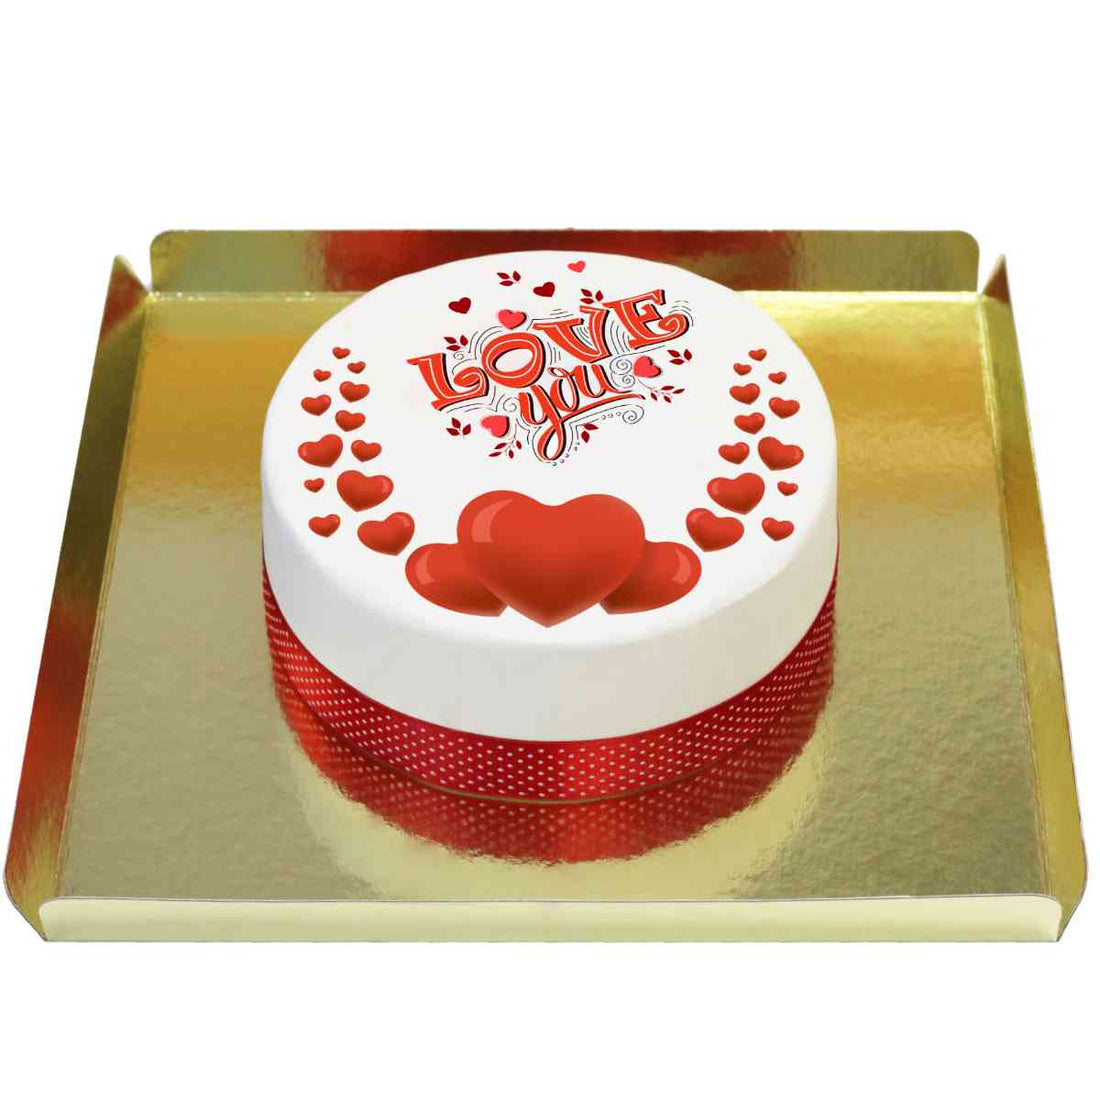 Love Cake